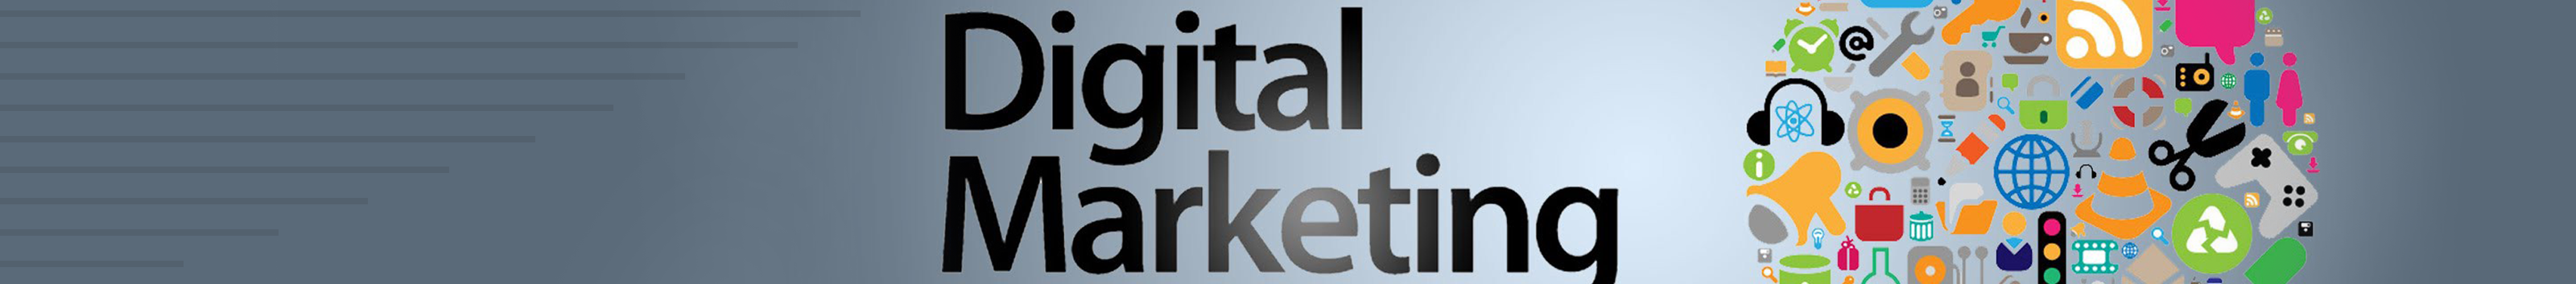 SOCIALIGHTS Digital Agency's profile banner